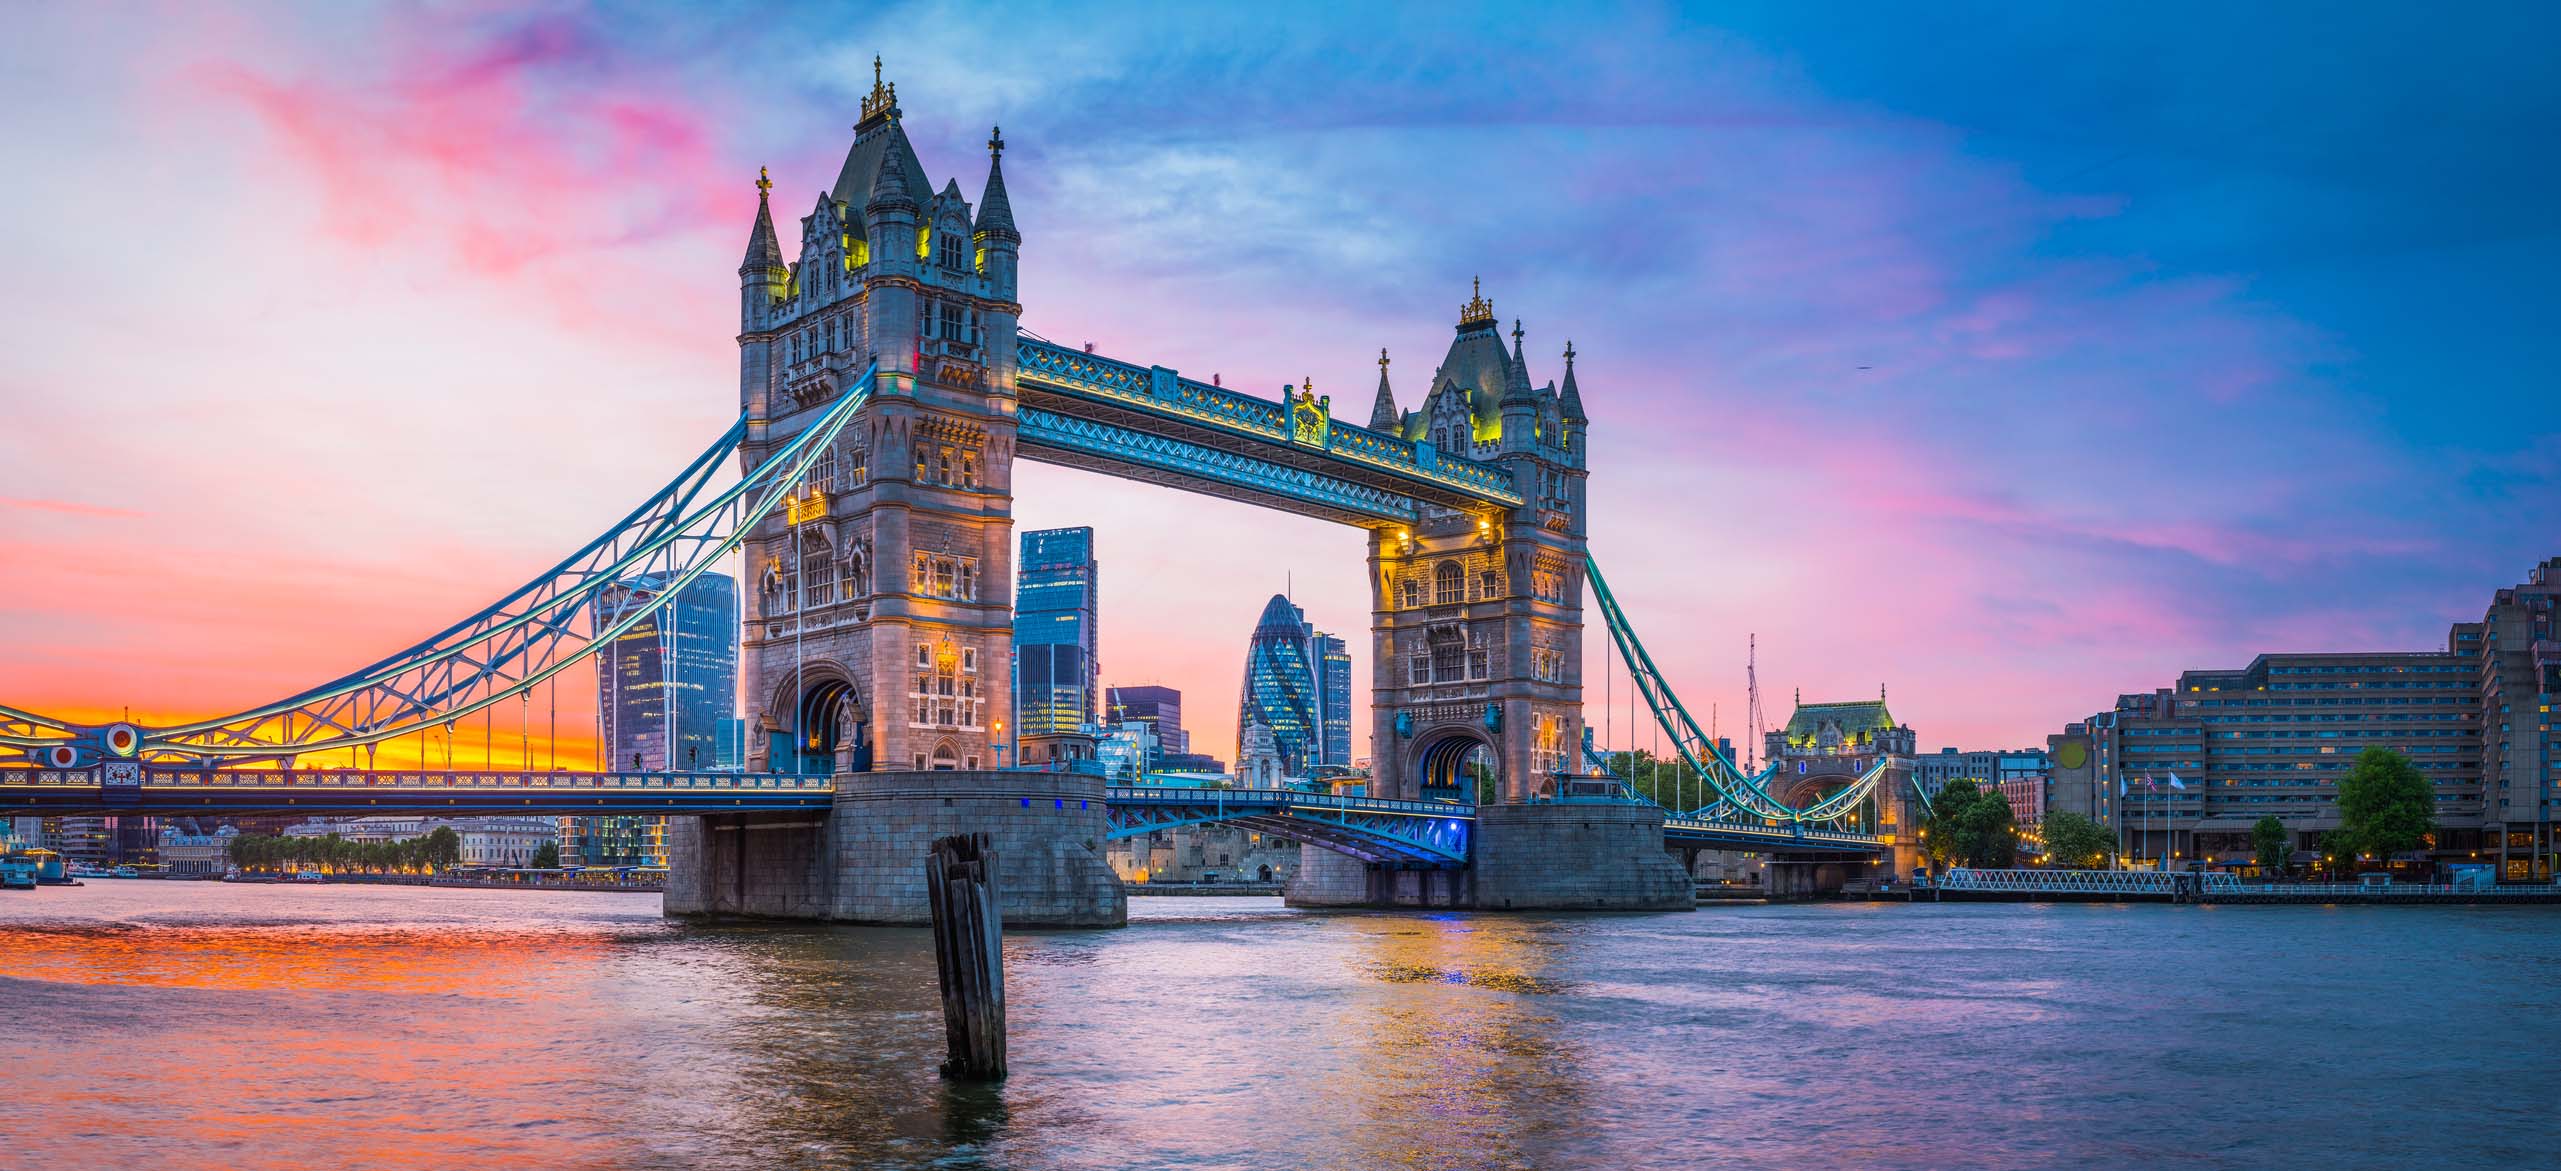 Tower Bridge | Hotel Employee Rate